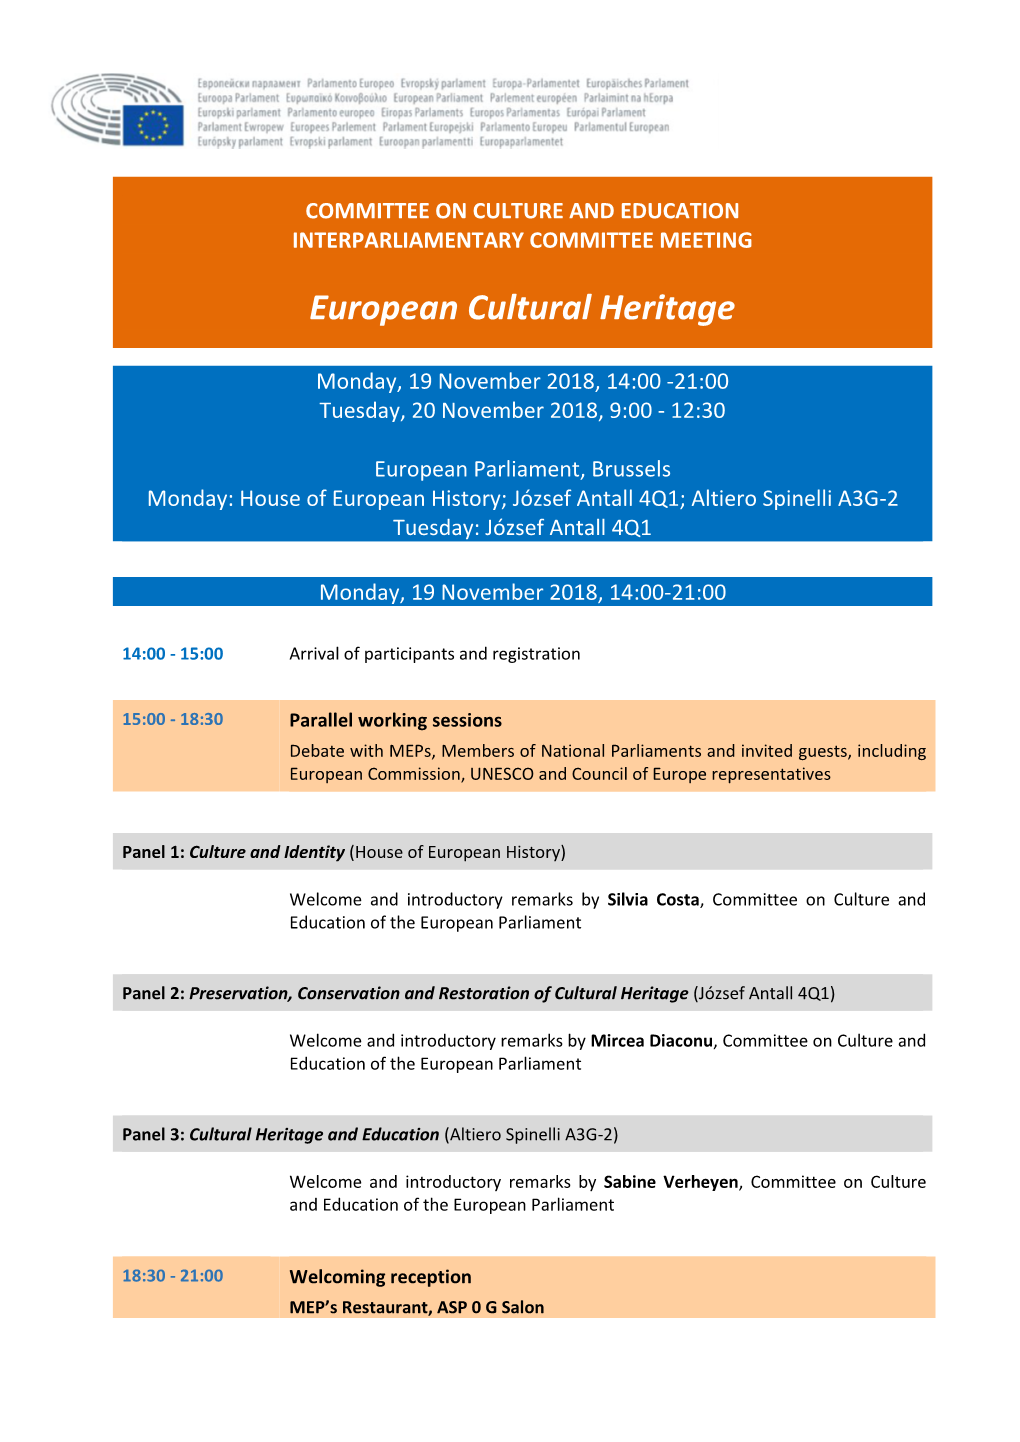 European Cultural Heritage